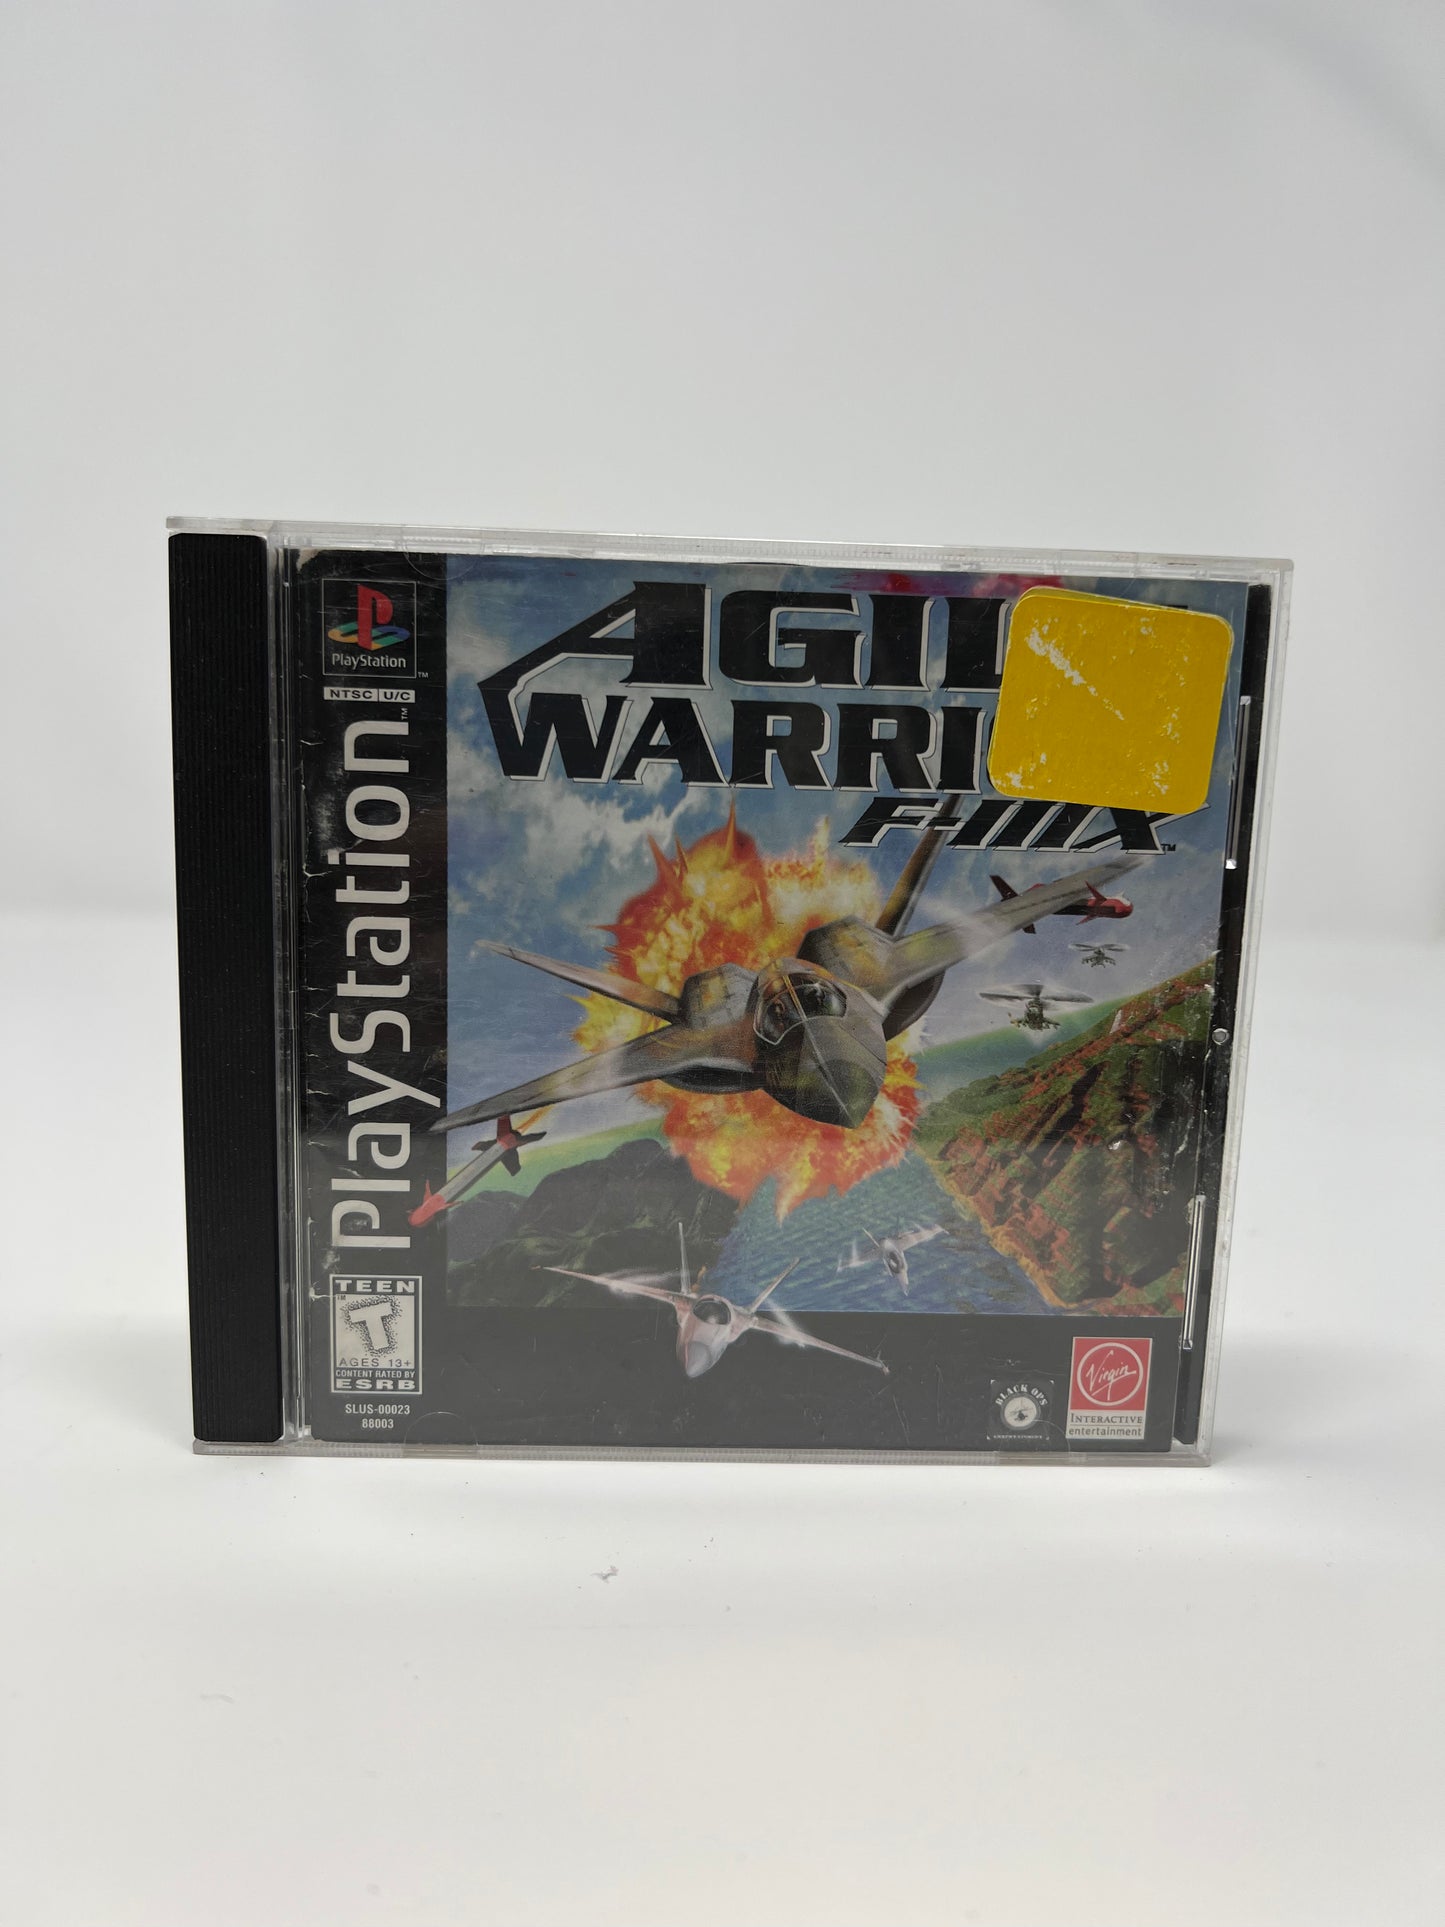 Agile Warrior F-IIIX - PS1 Game - Used